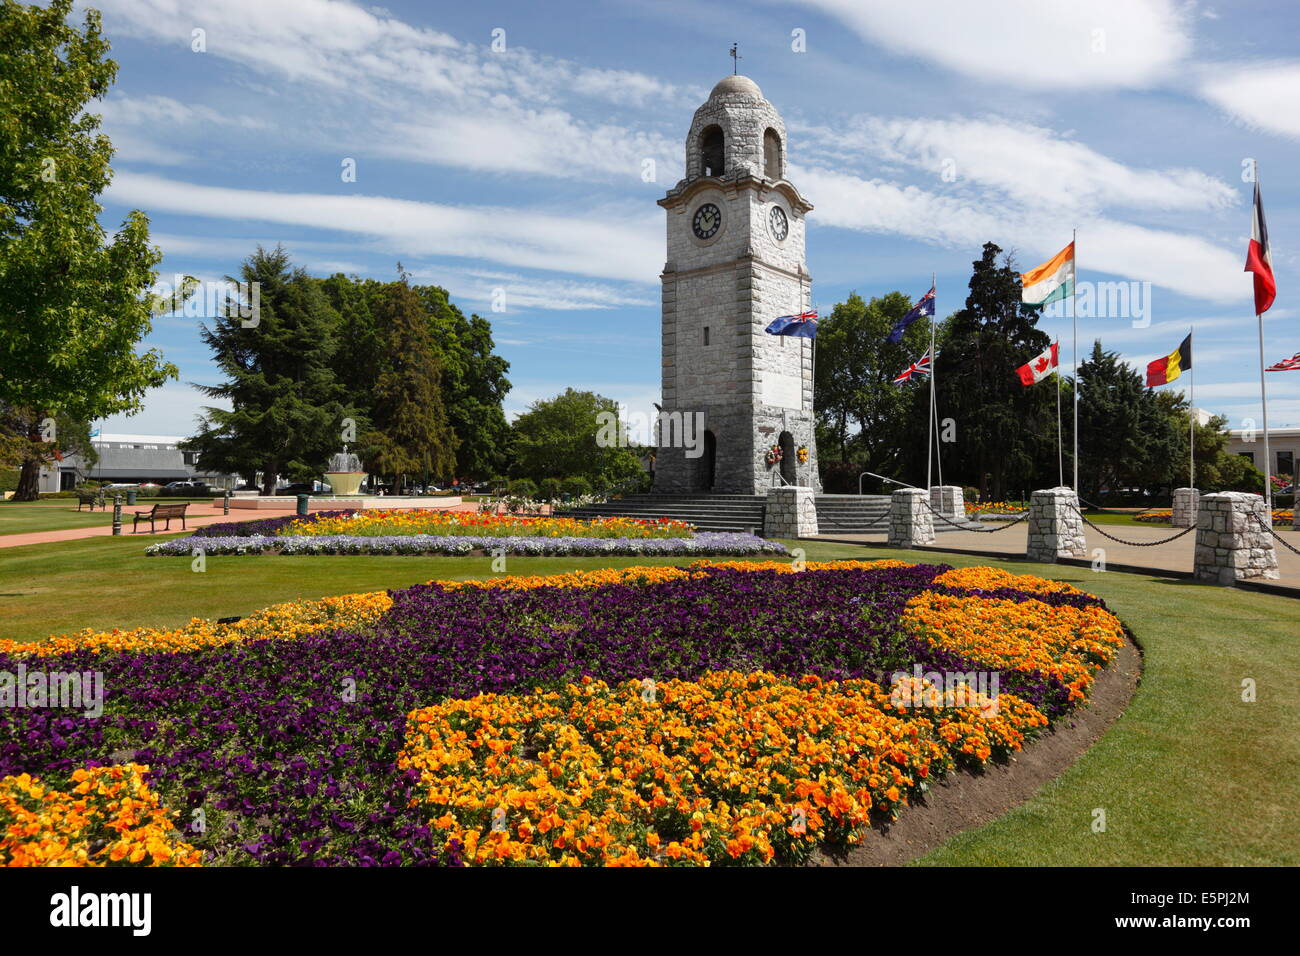 Seymour Square and clock tower, Blenheim, Marlborough region, South Island, New Zealand, Pacific Stock Photo